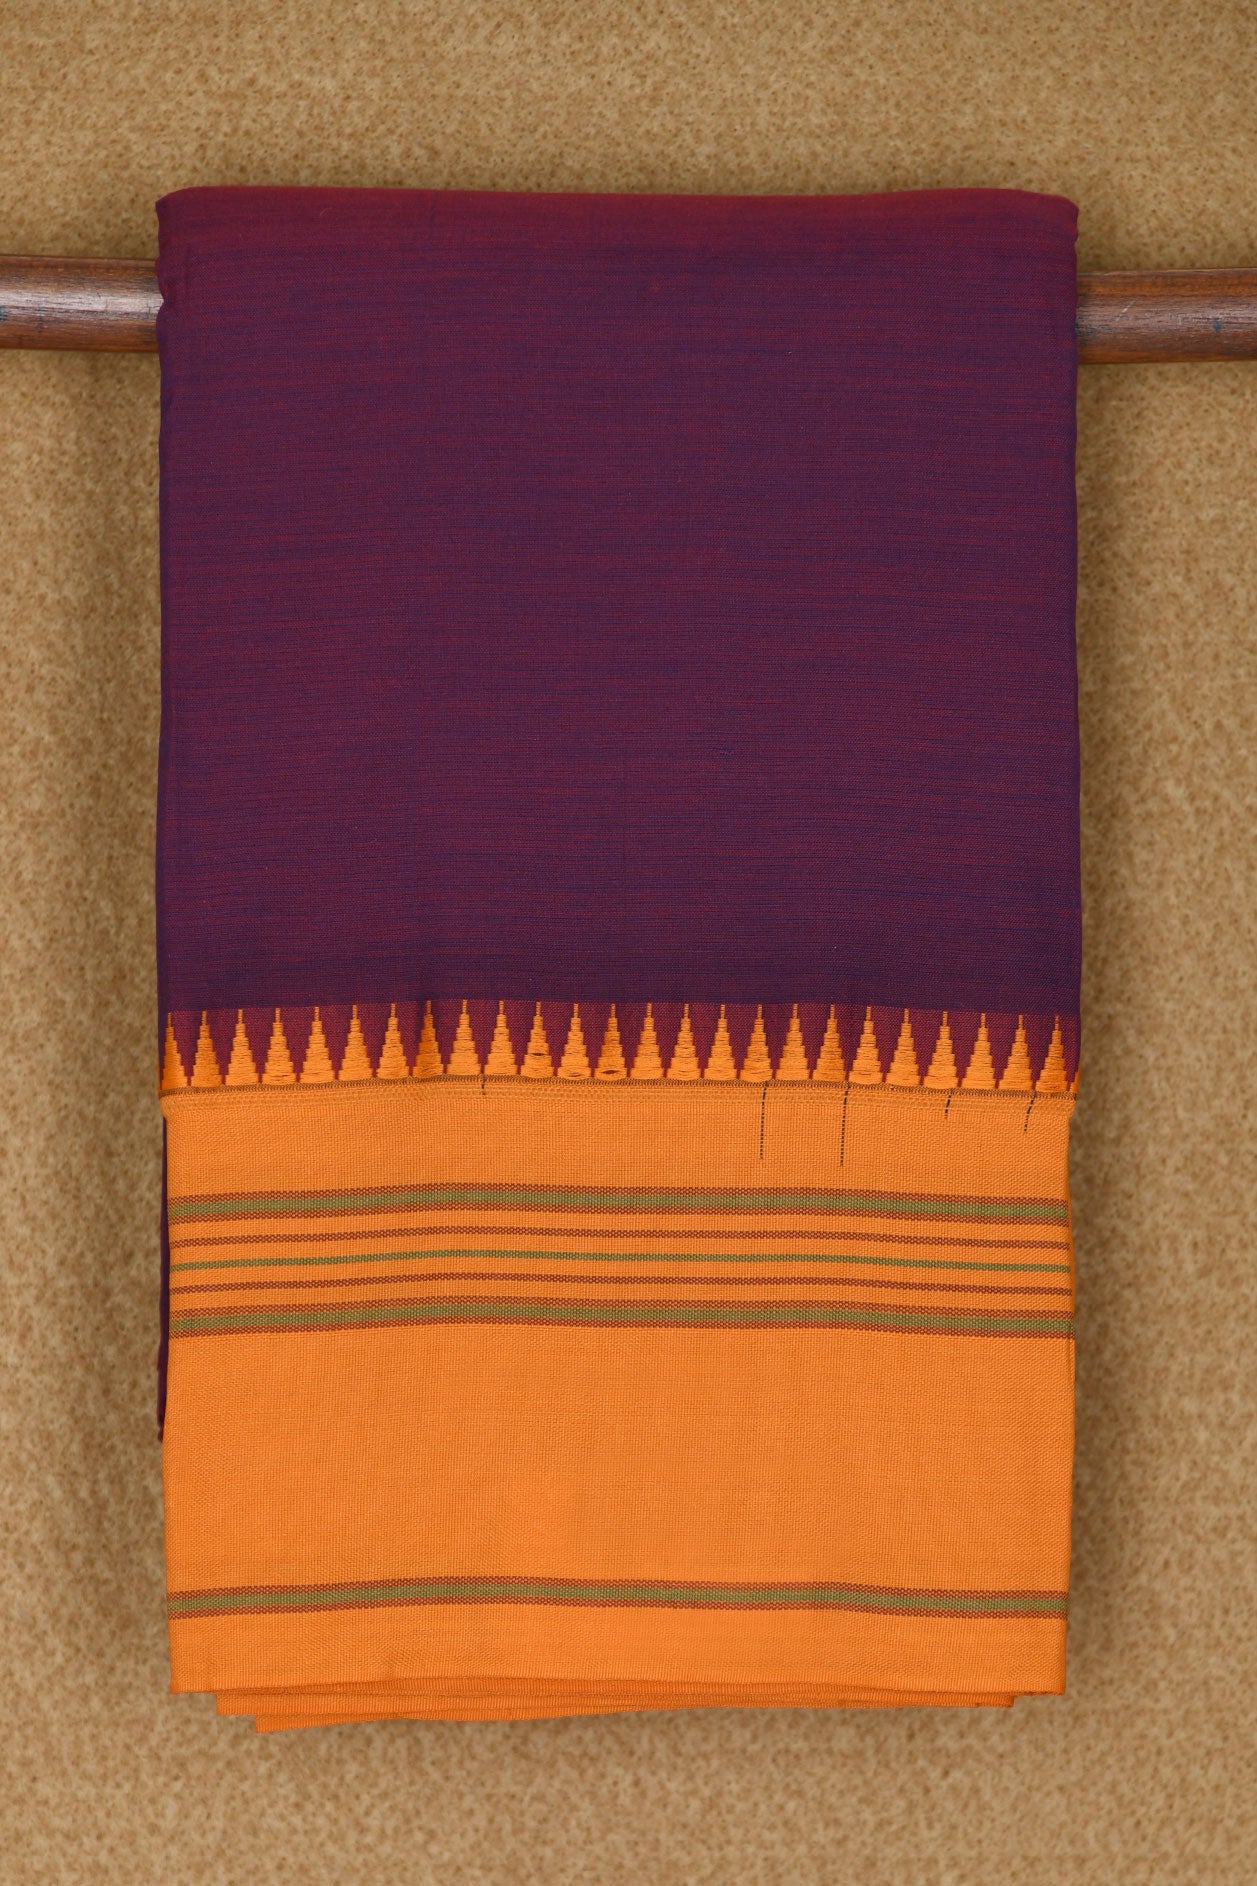 Contrast Temple Border In Plain Purple Semi Dharwad Cotton Saree